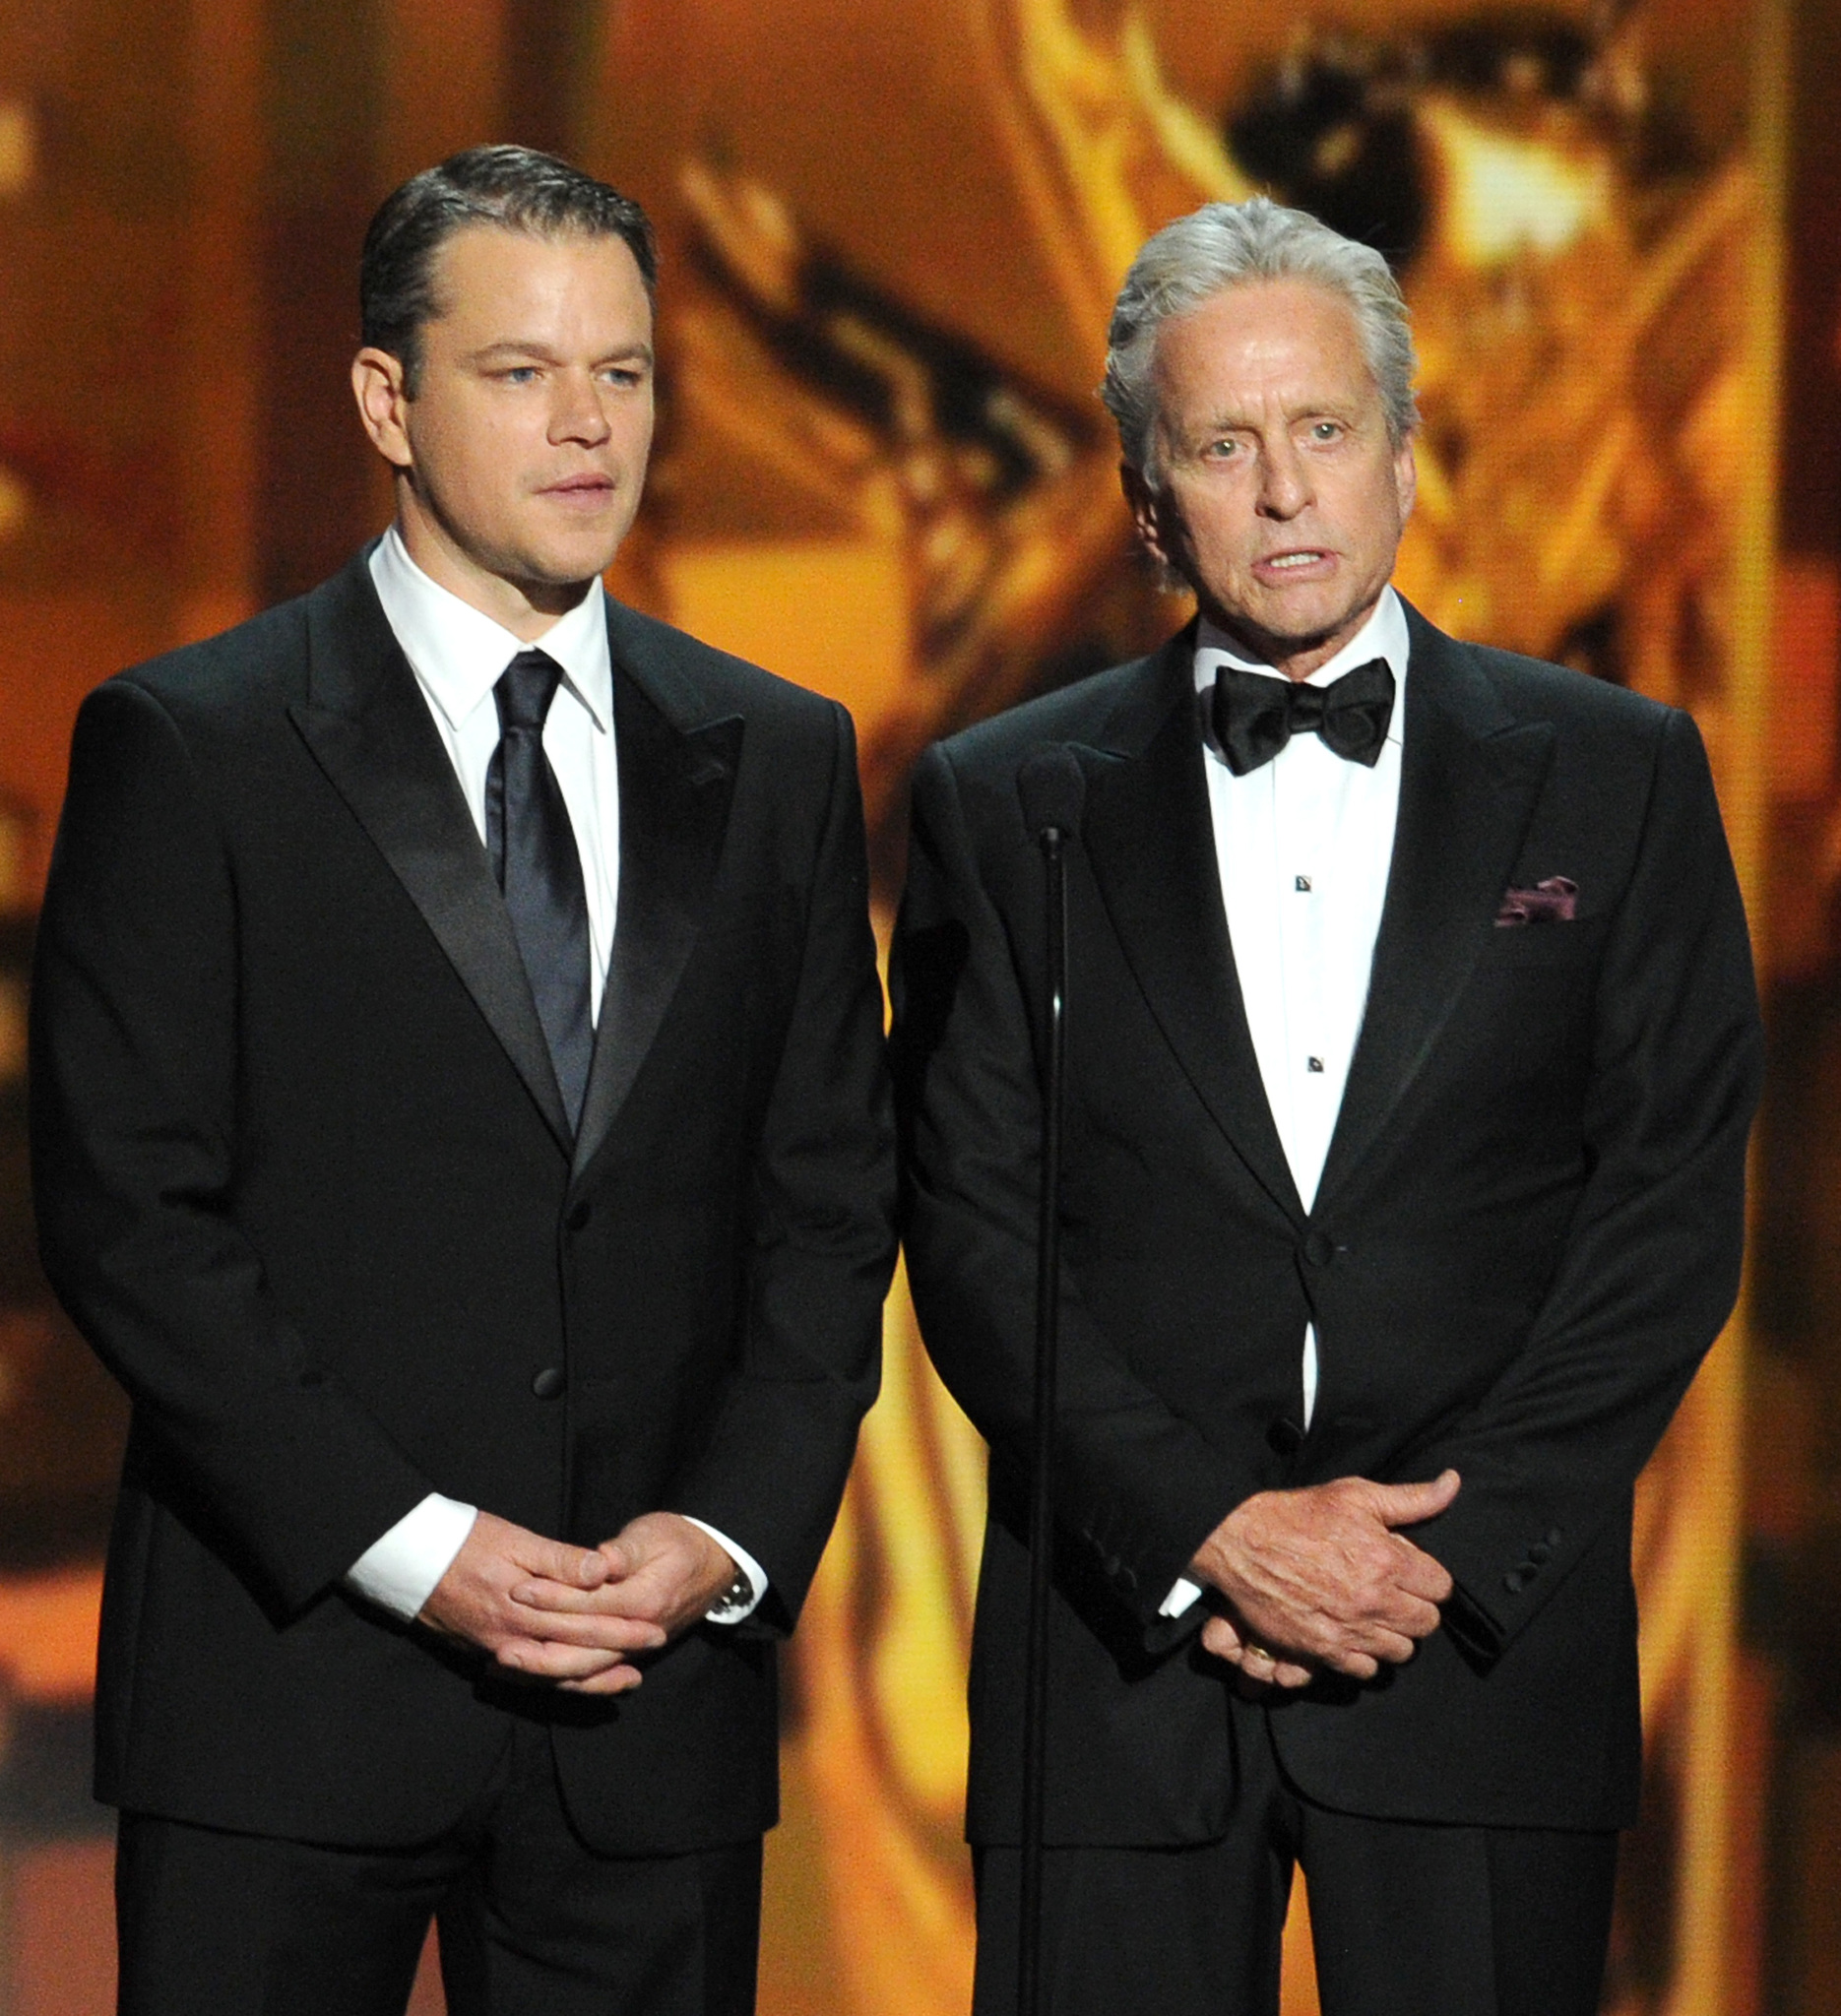 Michael Douglas and Matt Damon at event of The 65th Primetime Emmy Awards (2013)